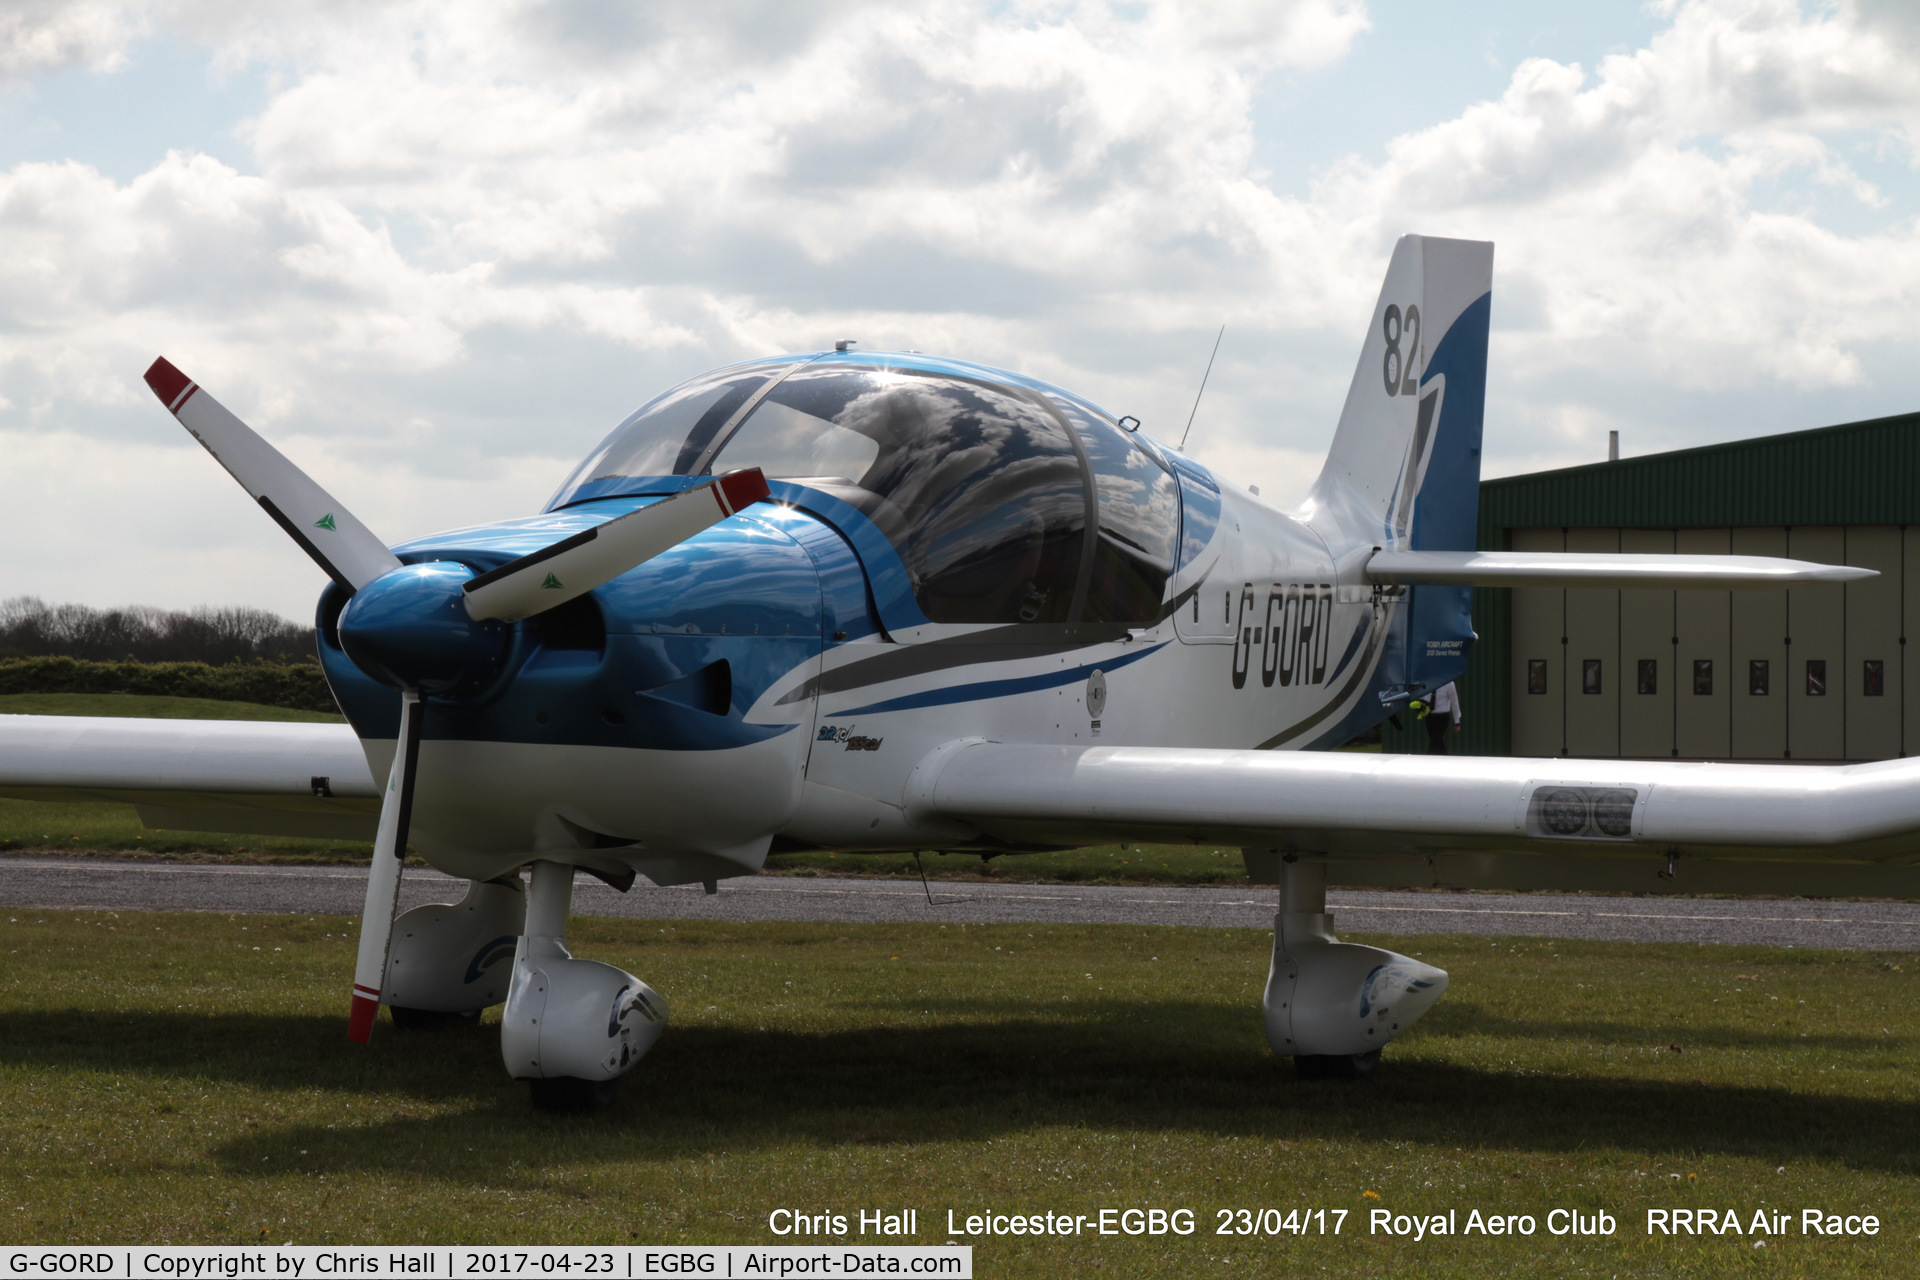 G-GORD, 2014 Robin DR-400-140B Major Major C/N 2669, Royal Aero Club 3R's air race at Leicester